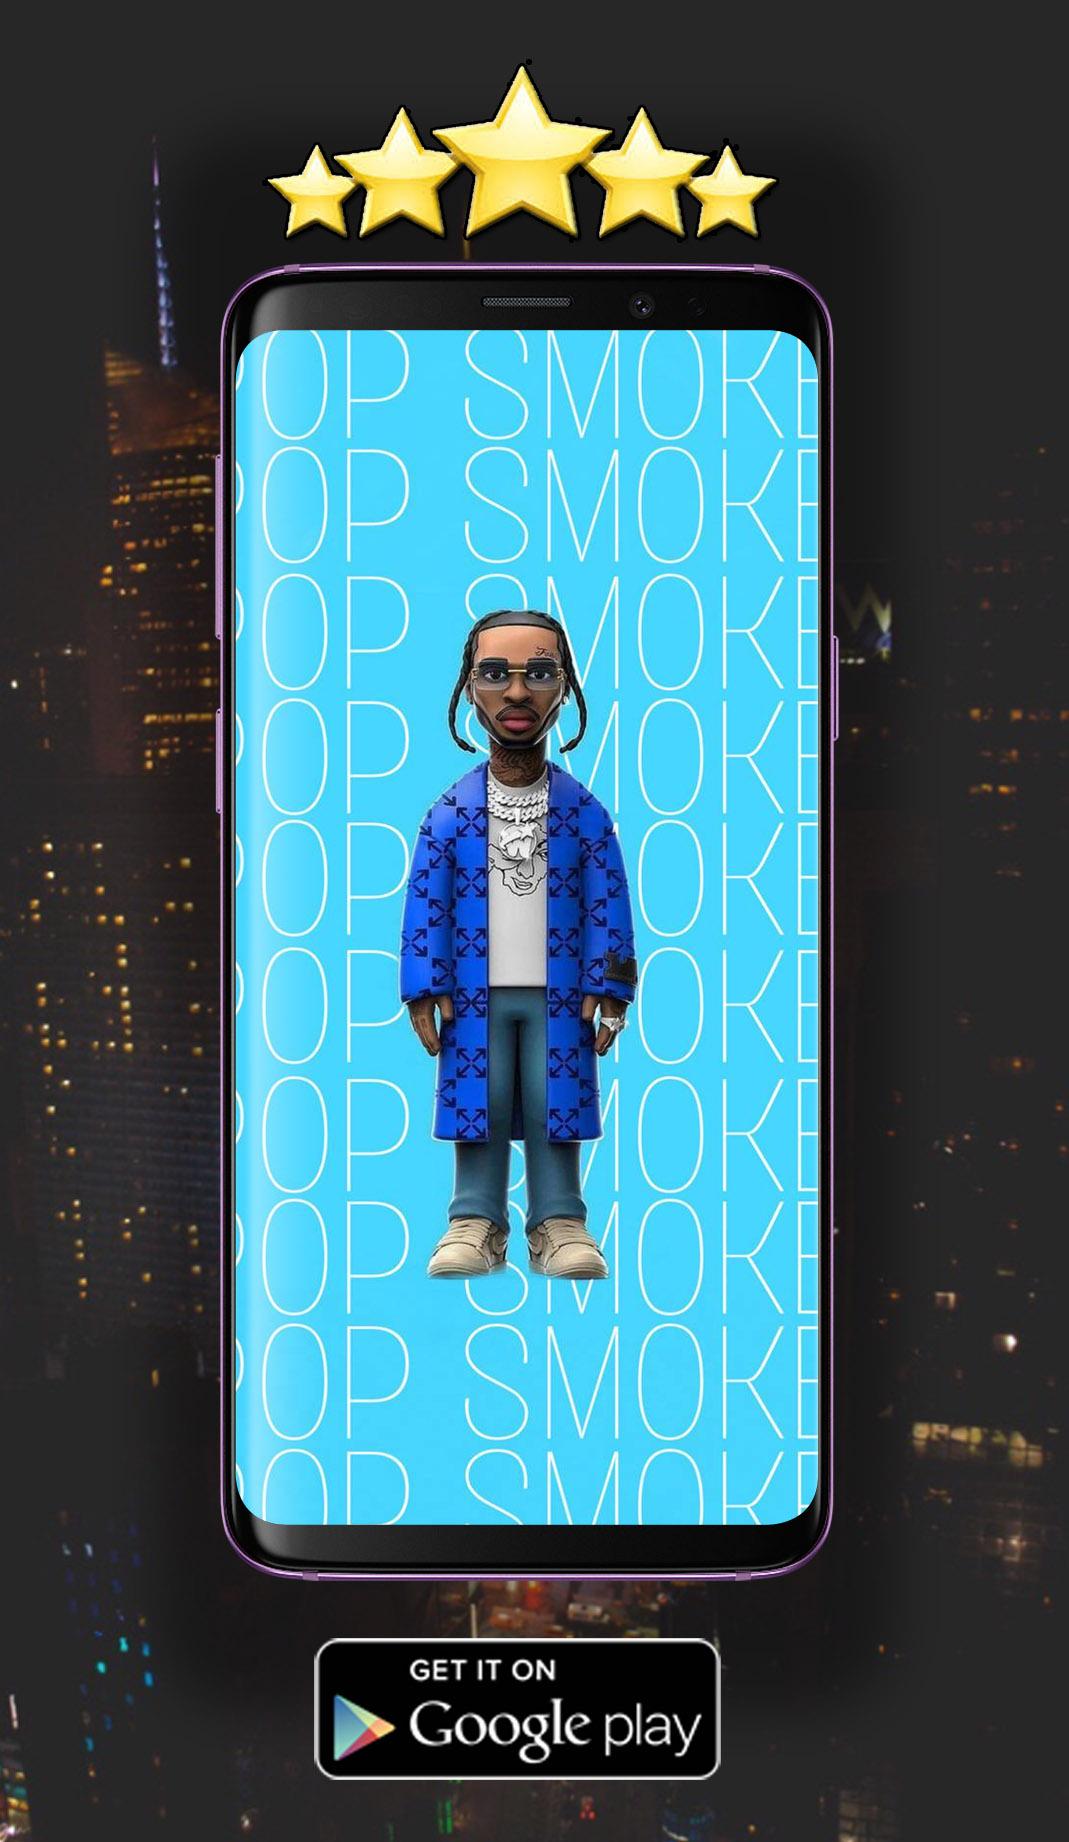 Pop Smoke Wallpaper [RIP] 1.0 Screenshot 12